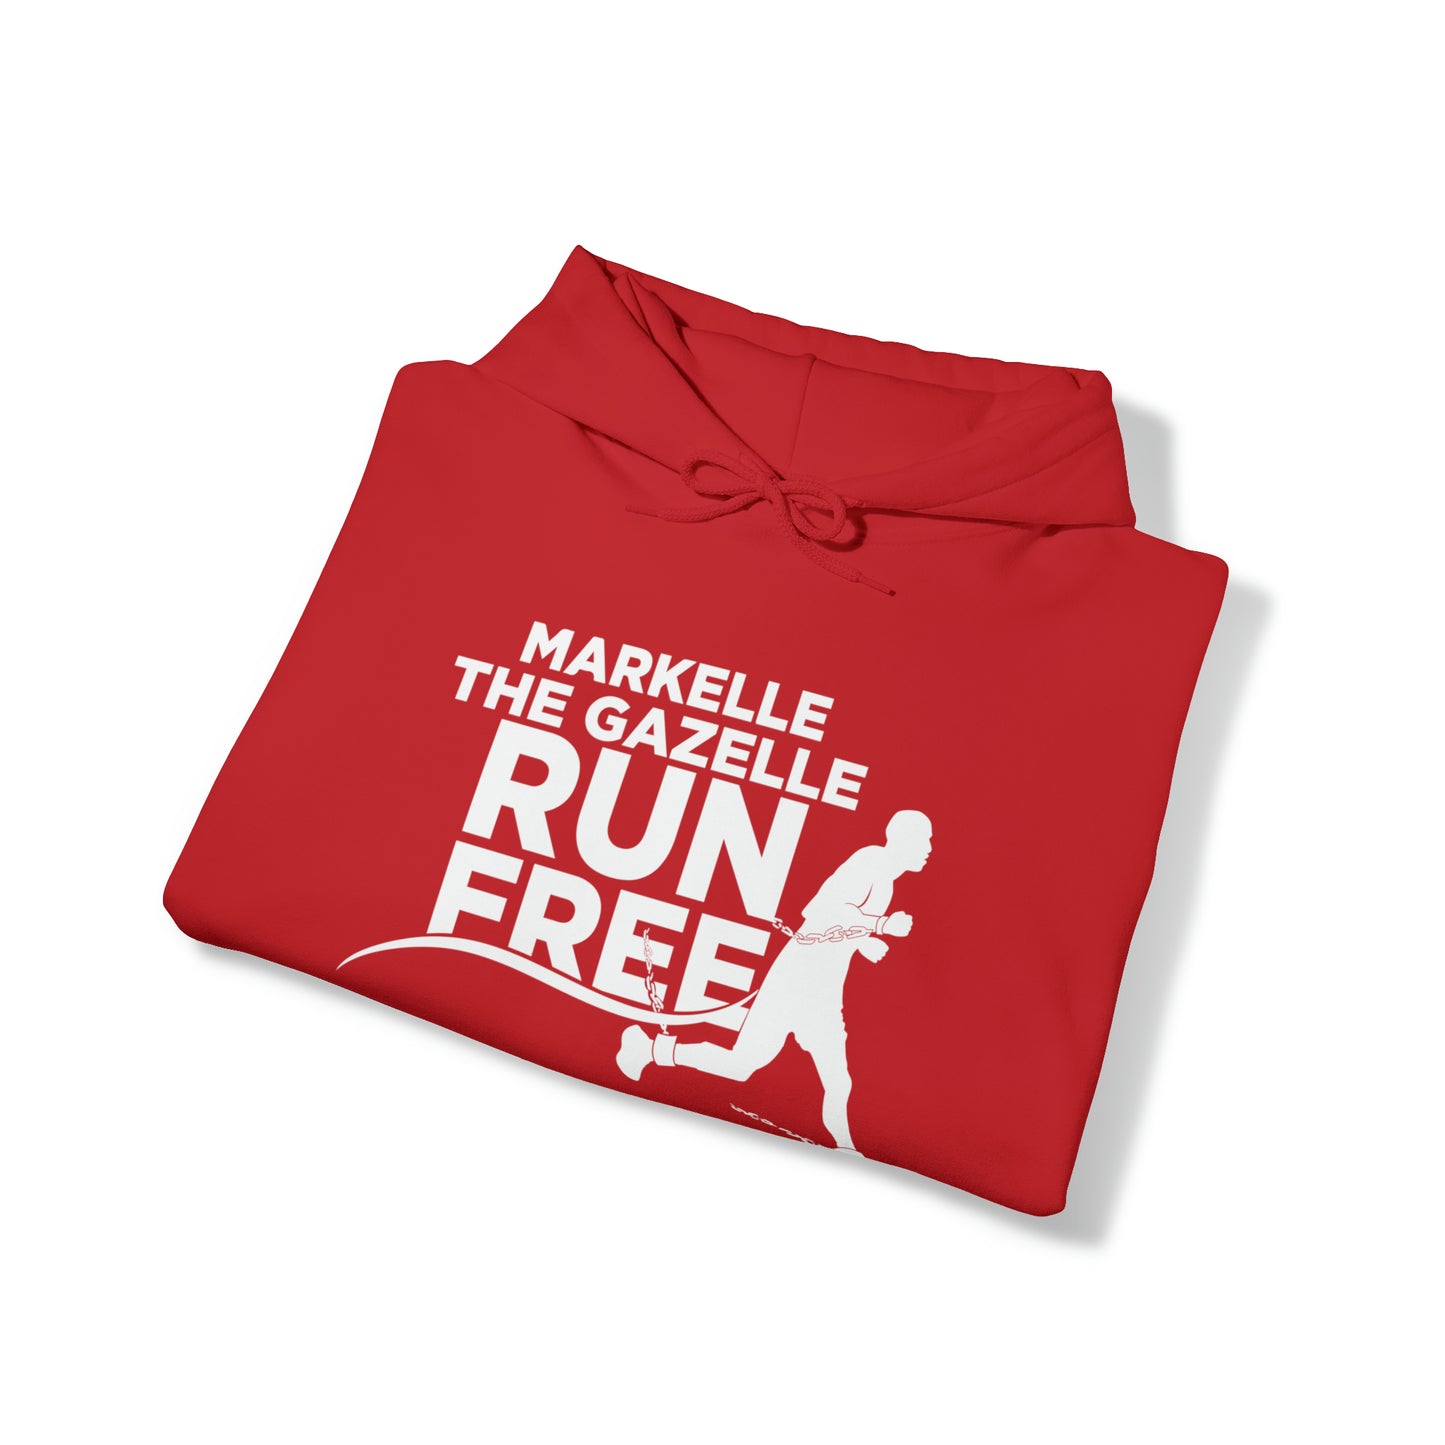 Markelle the Gazelle RUN FREE Hooded Sweatshirt - More at MarkeleTheGazelle.com